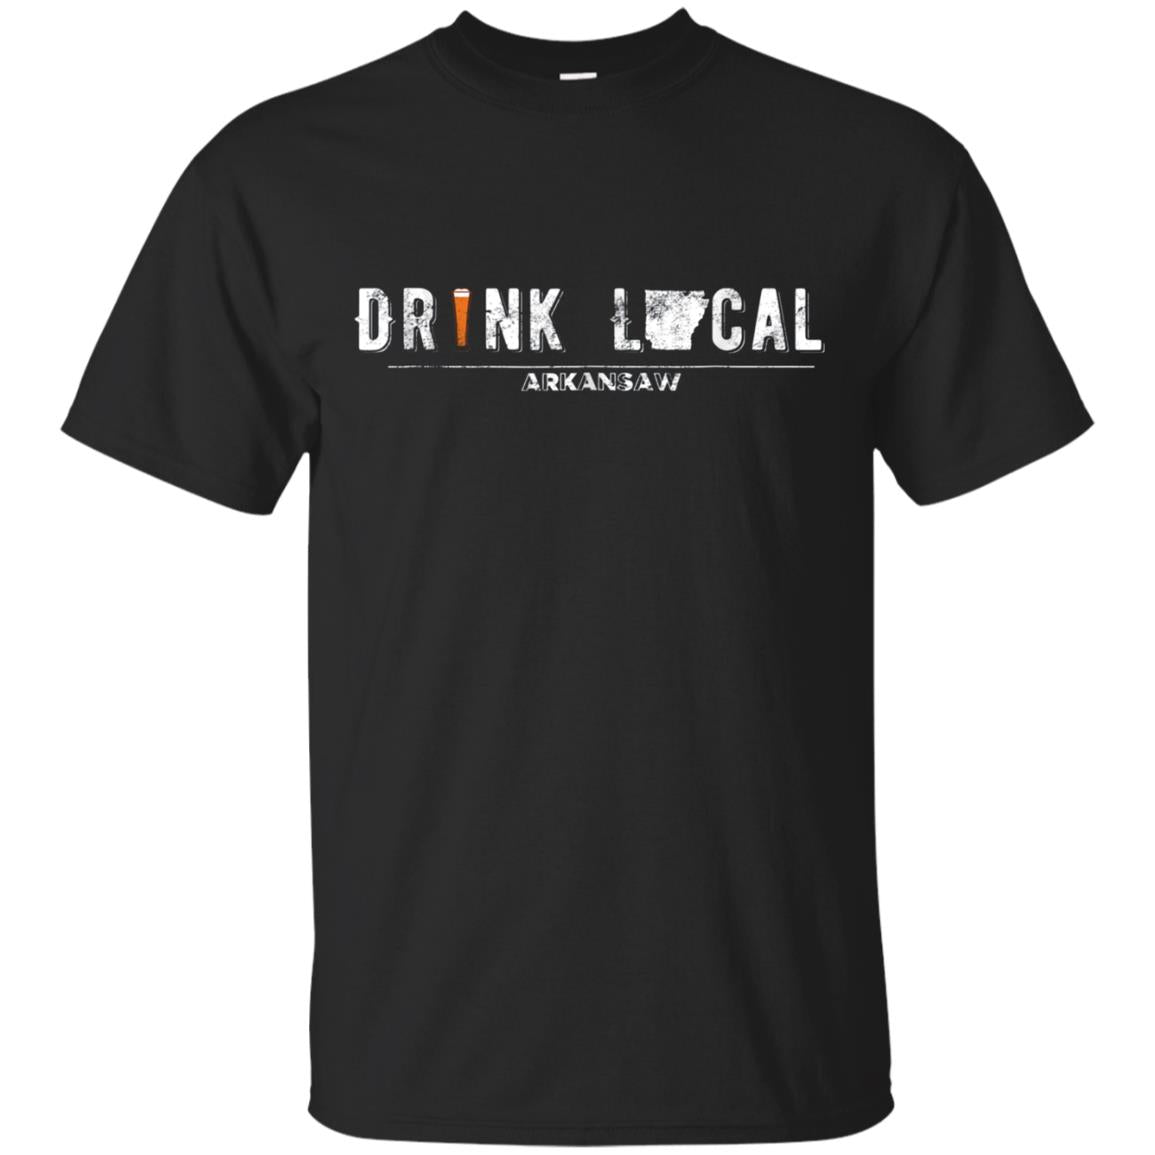 Drink Craft Beer Drink Local Arkansas T Shirt